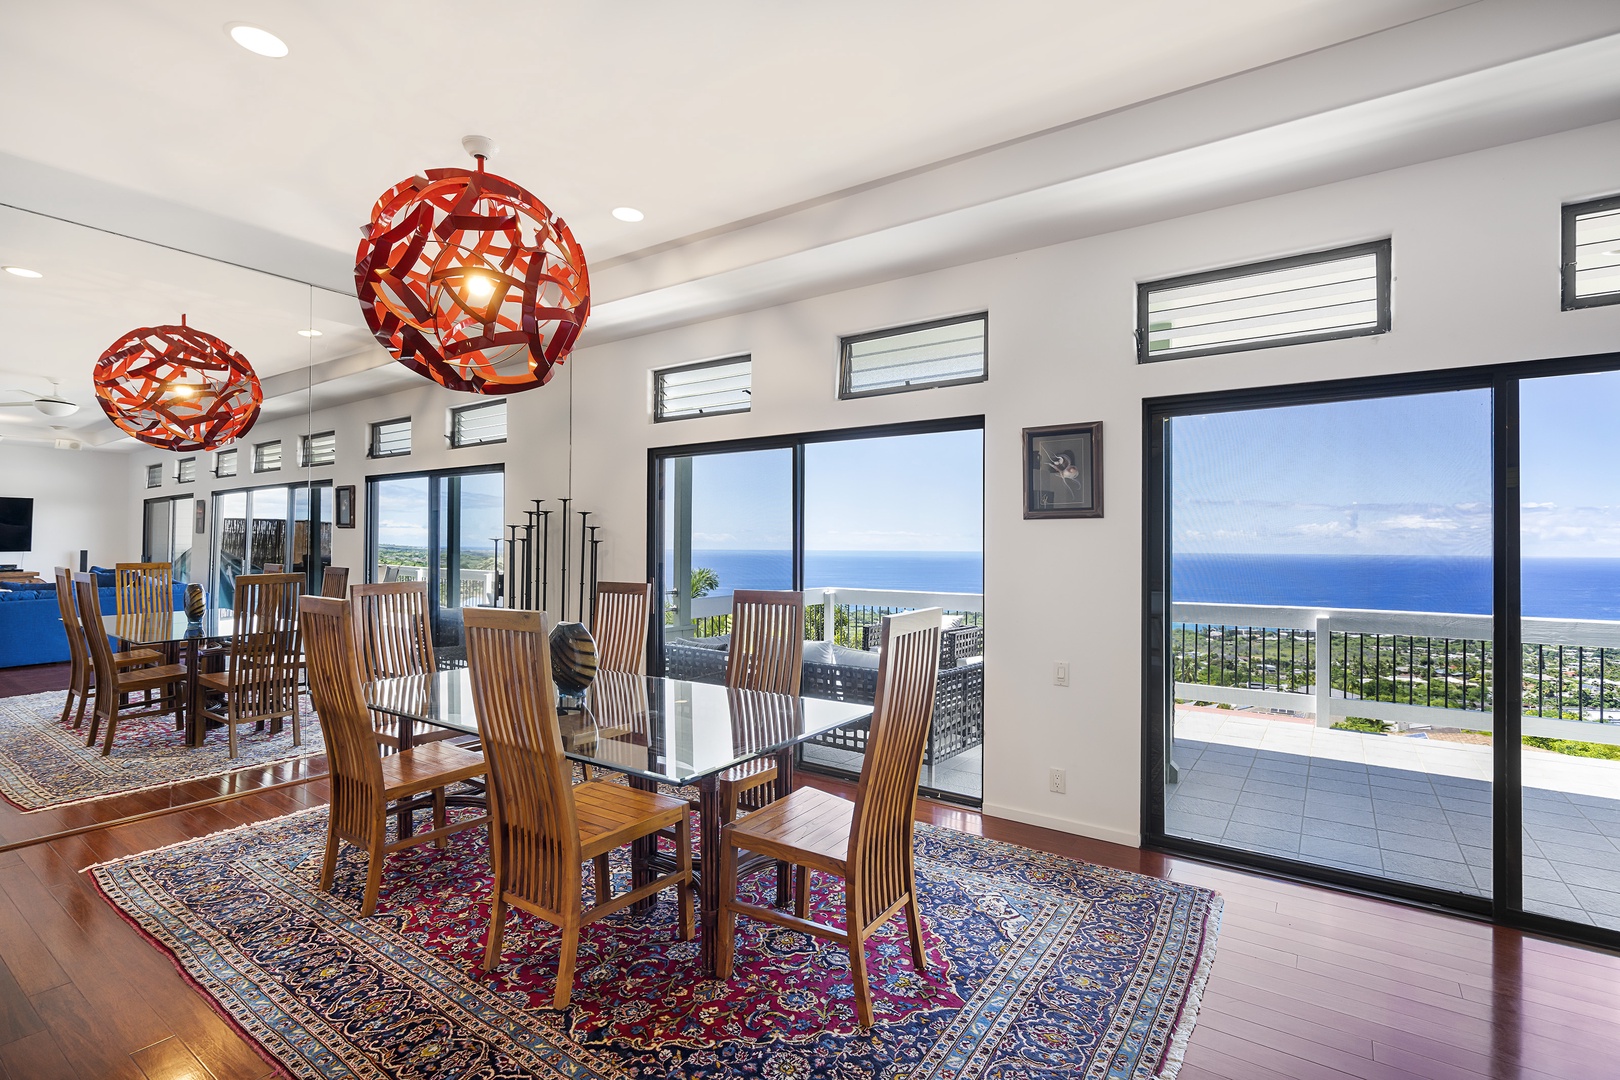 Kailua Kona Vacation Rentals, Ho'o Maluhia - Beautiful appointed indoor dining room!